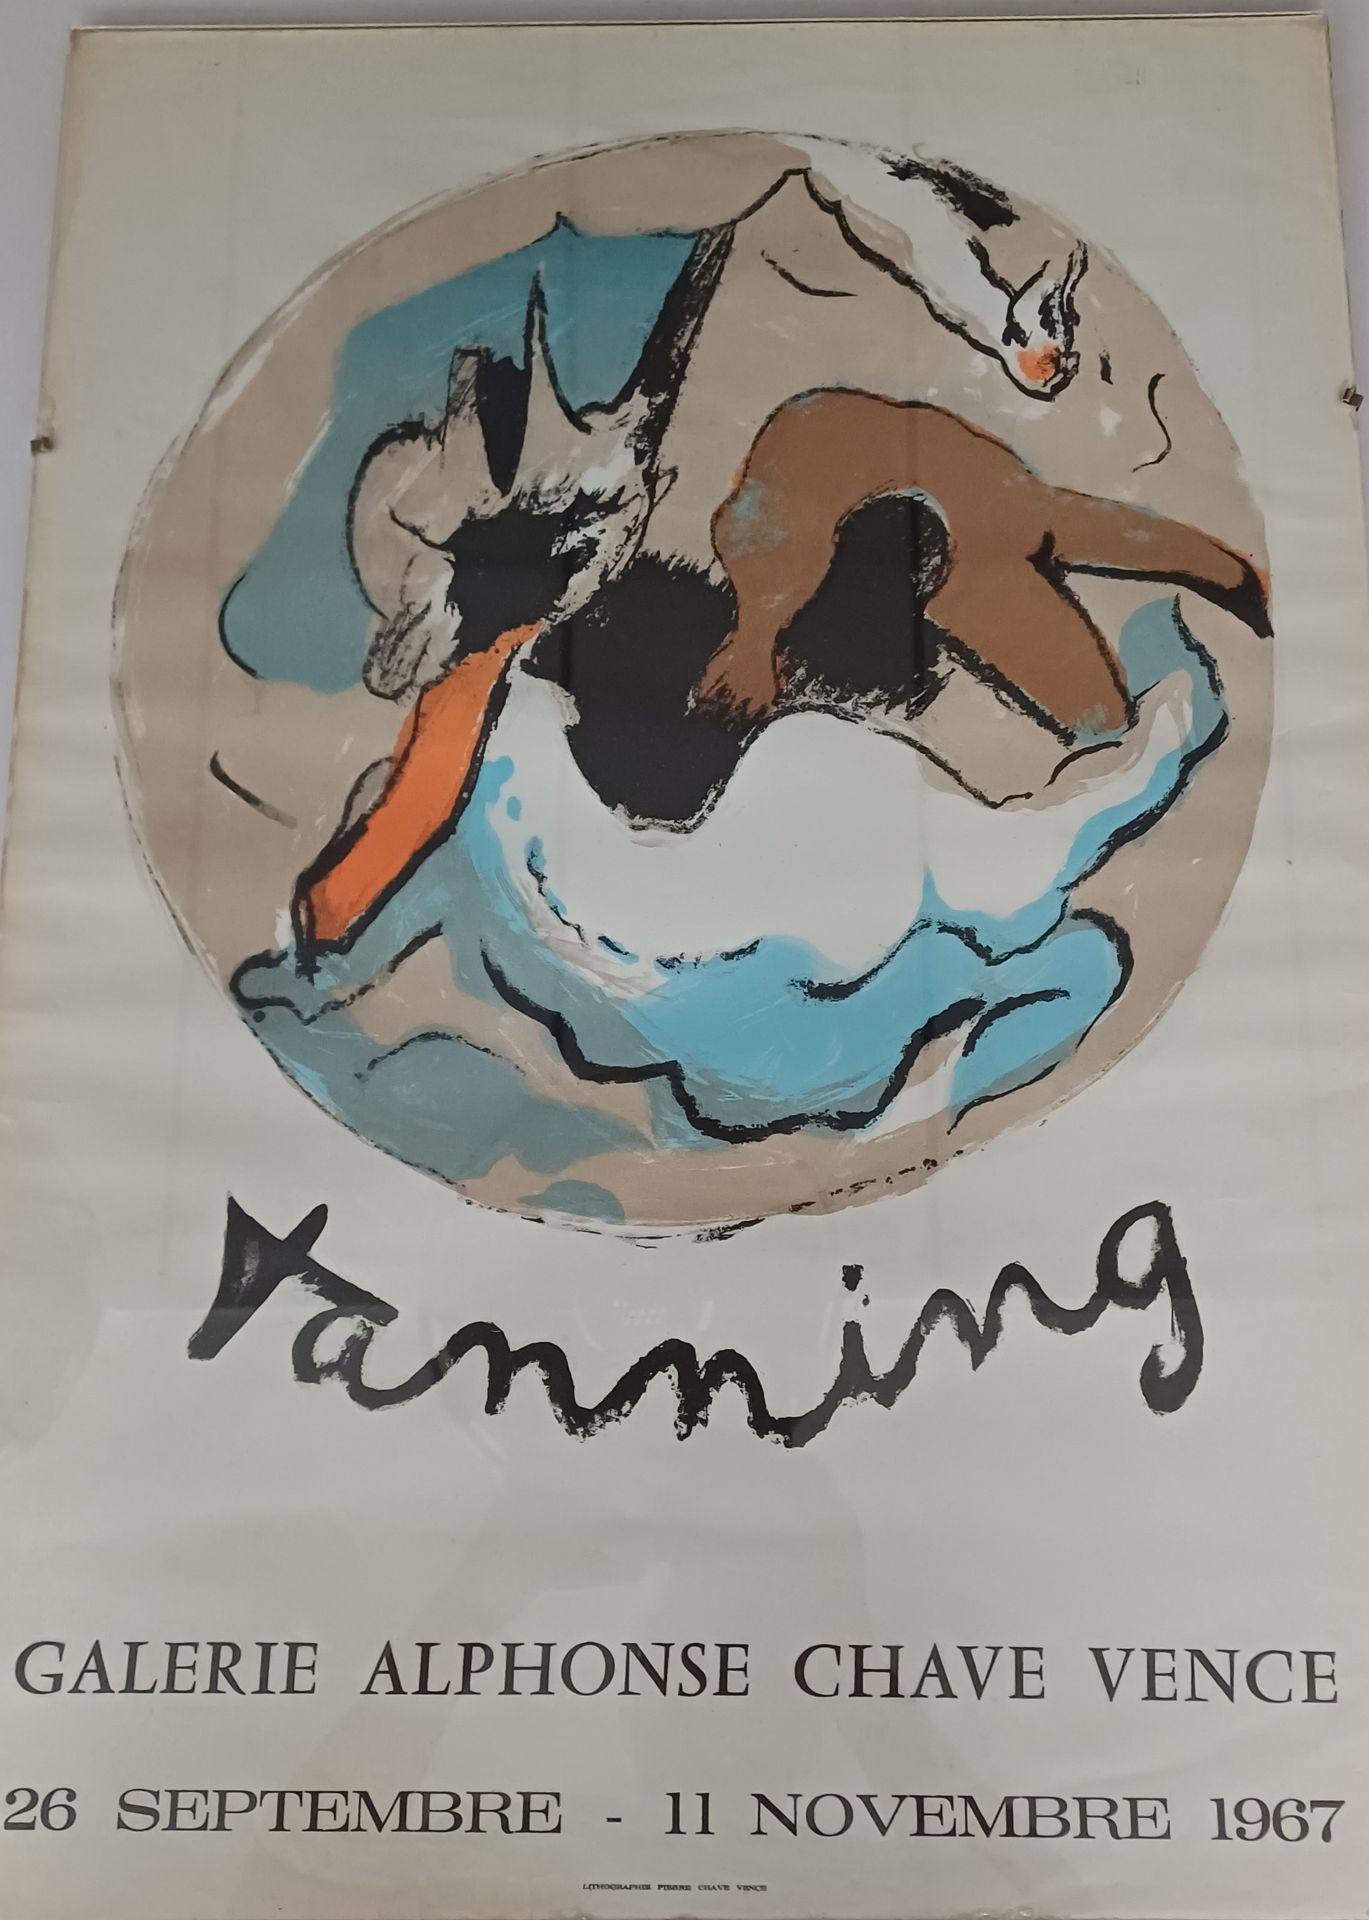 Tanning Affiche
Tanning
Galerie Alphonse Chave Vence 1967
sous verre, 69 x 49 cm&hellip;